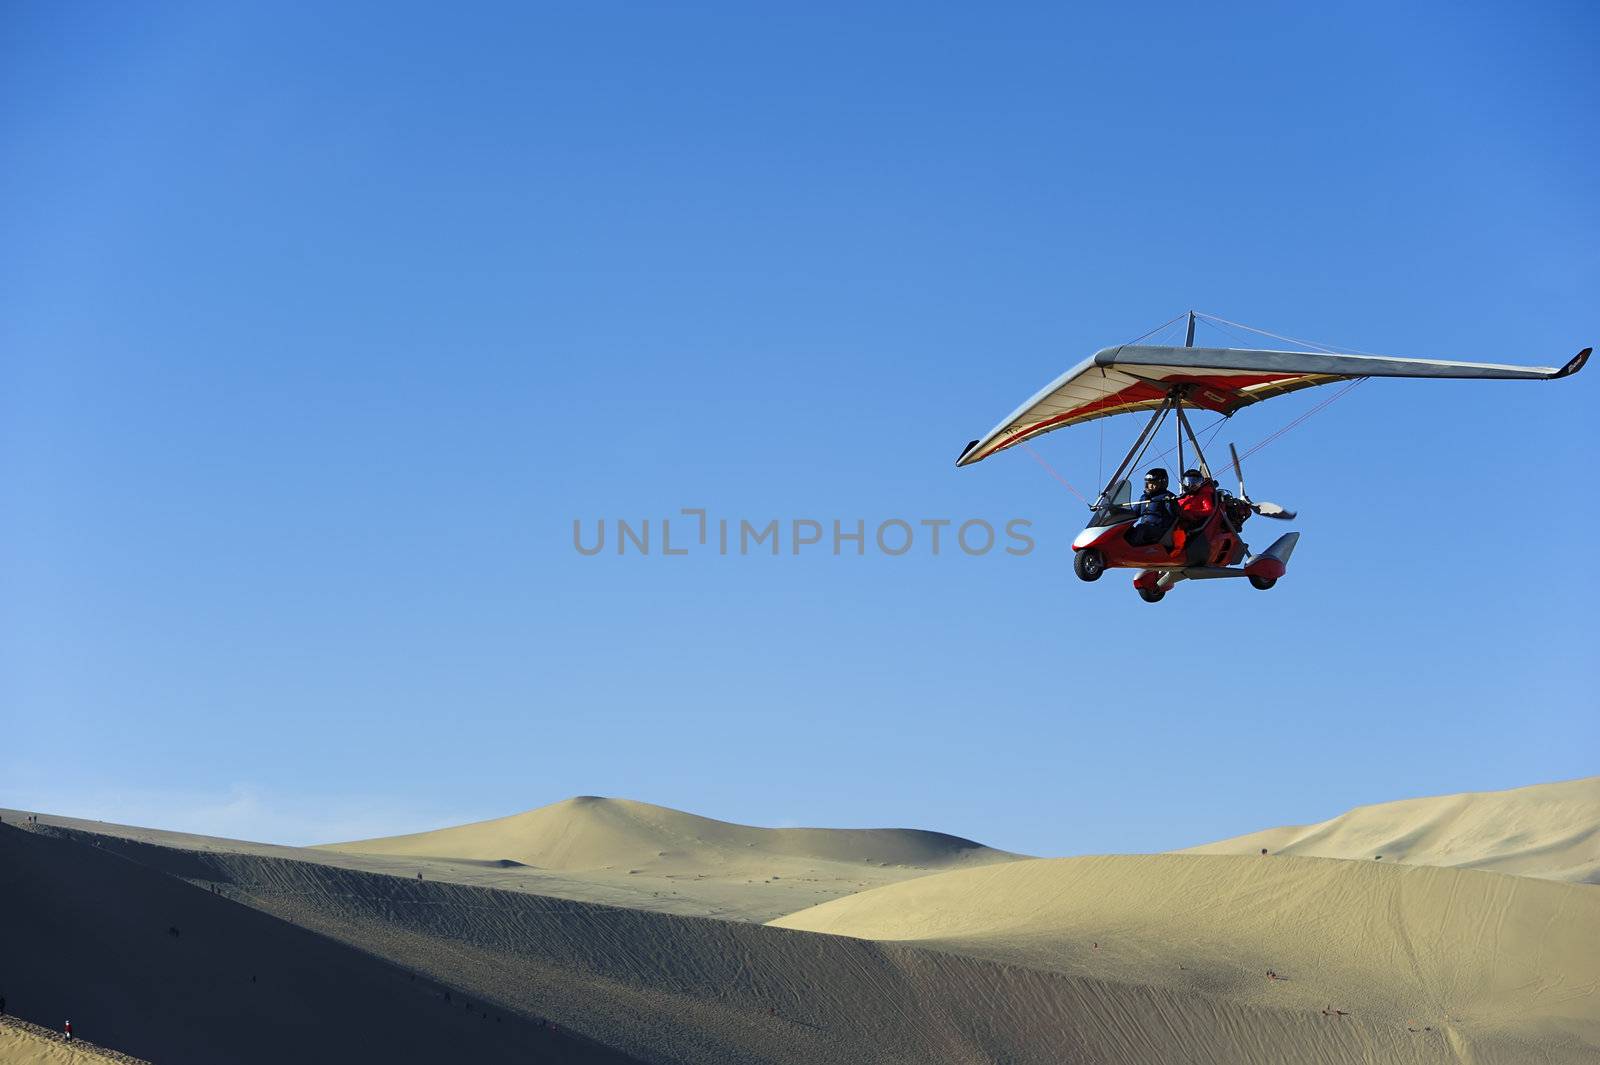 powered glider flying above the desert by jackq